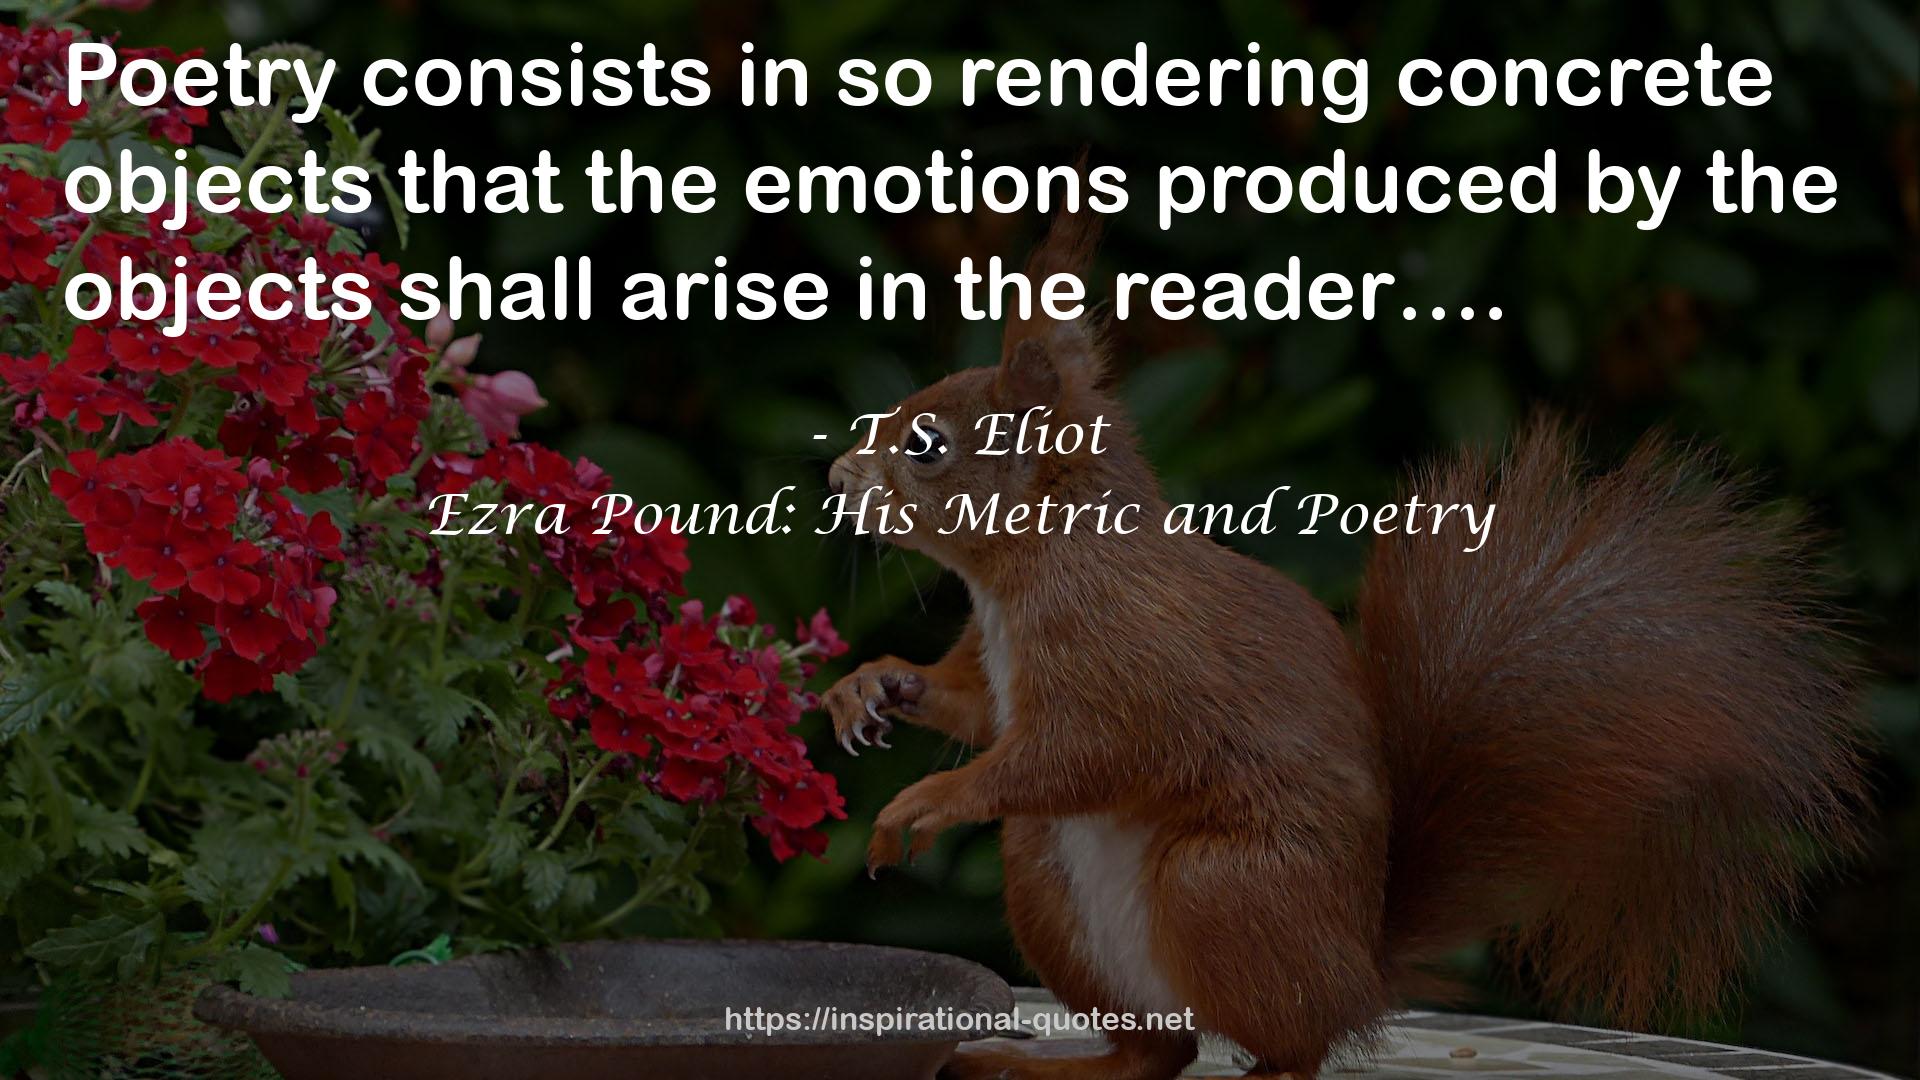 Ezra Pound: His Metric and Poetry QUOTES